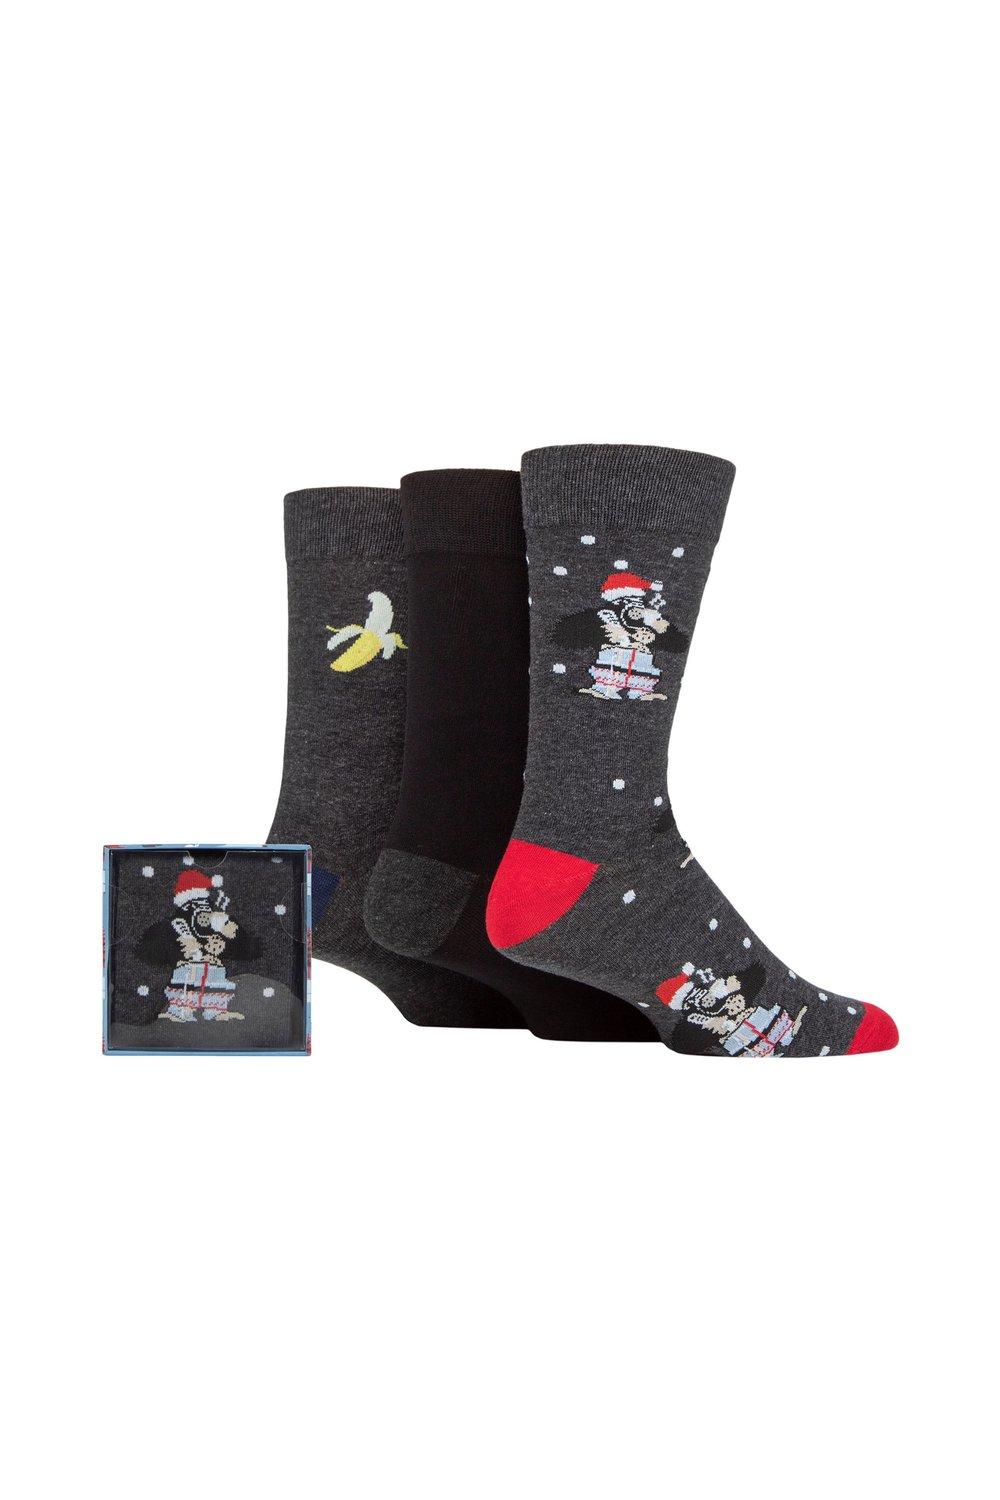 sirett dawn winter wonderland 3 пары носков в подарочной упаковке Winter Wonderland Christmas Cube SOCKSHOP Wild Feet, черный